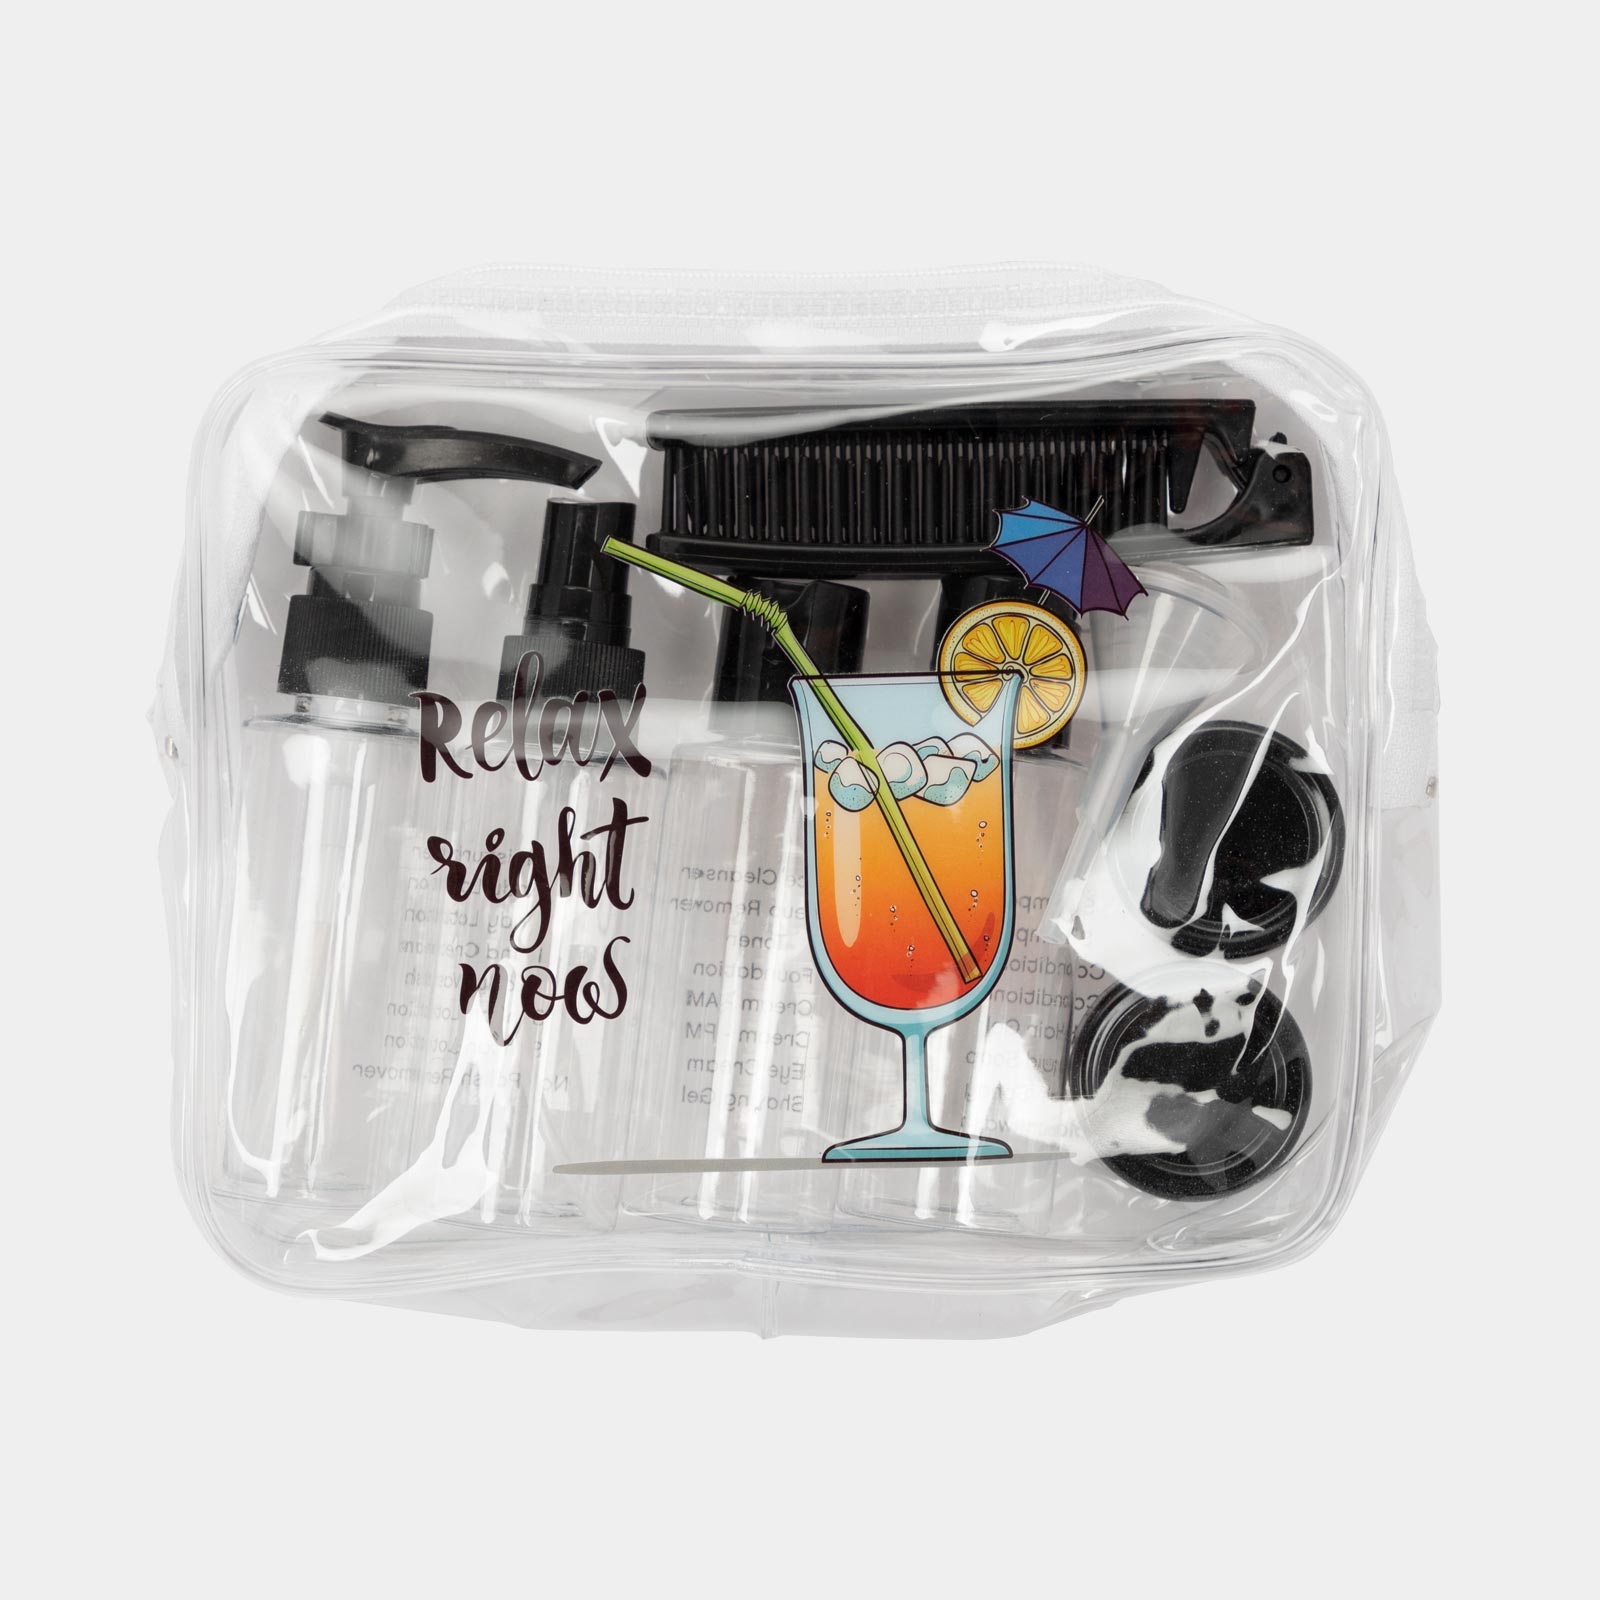 Kit de recipientes para viaje relax right 12 piezas